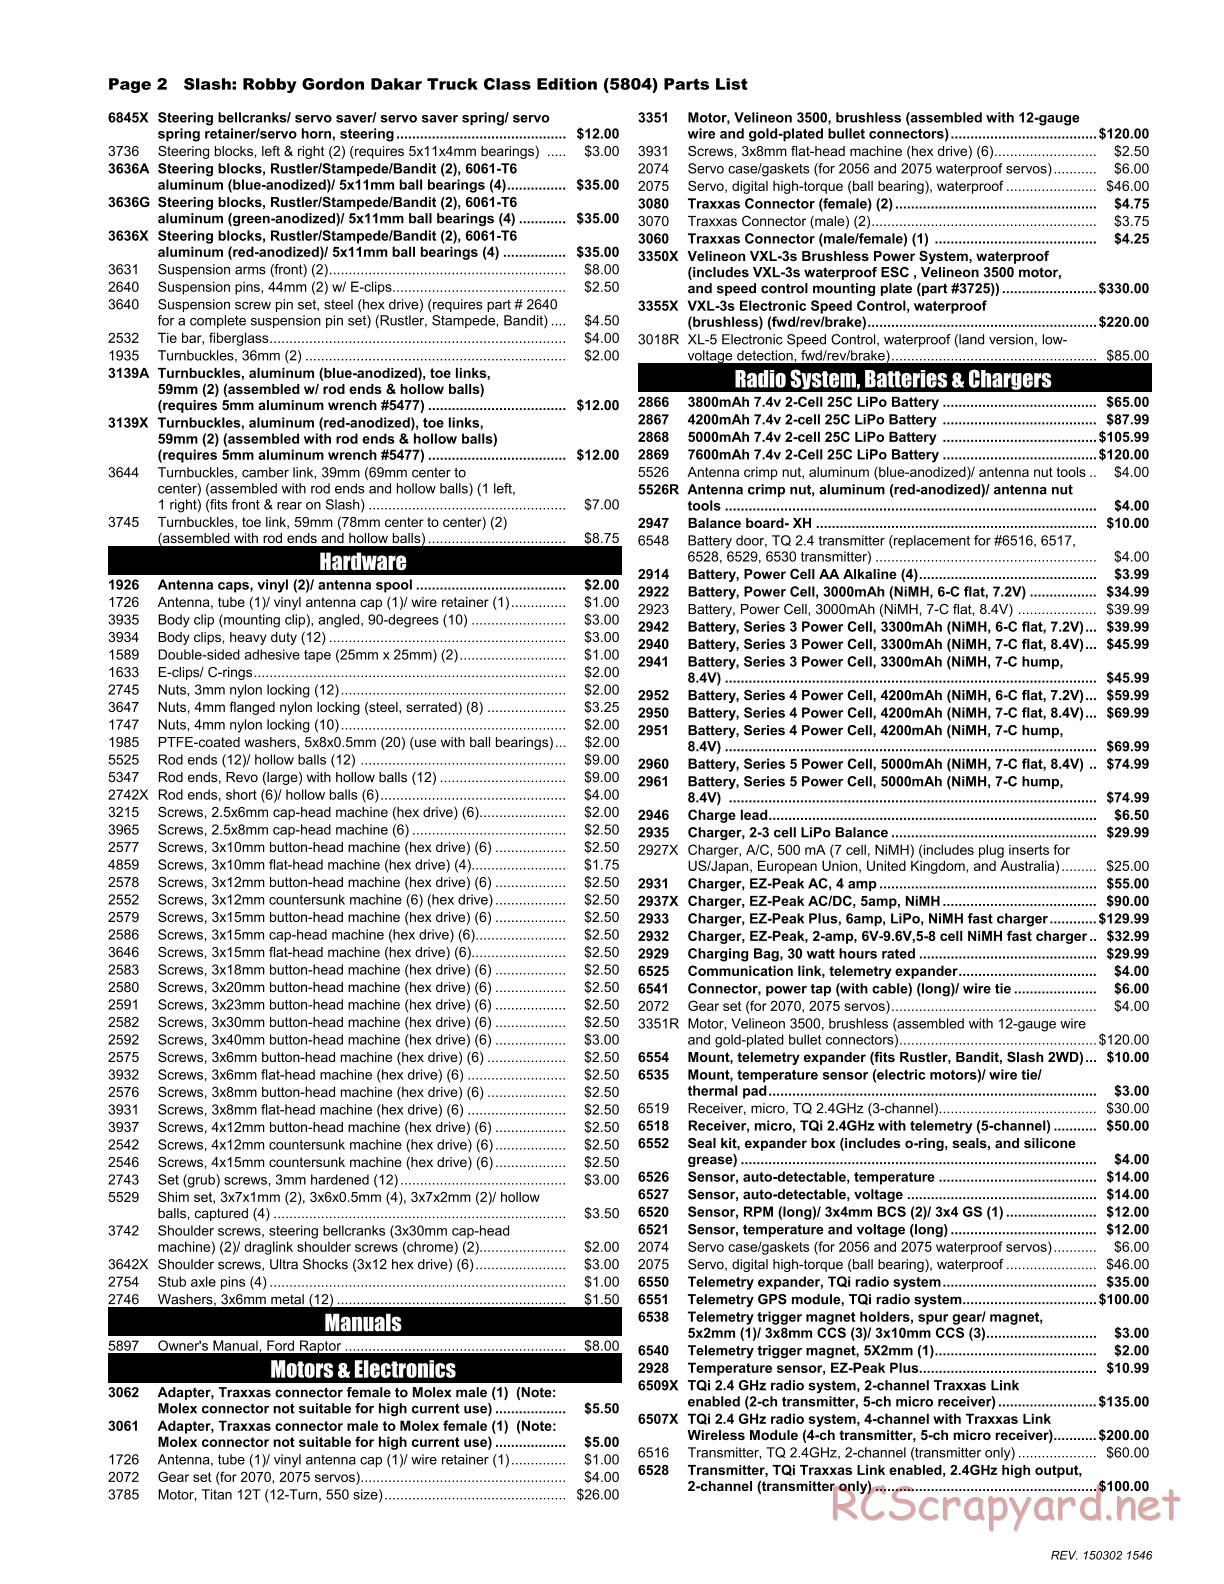 Traxxas - Slash 2WD Robby Gordon Dakar Ed (2012) - Parts List - Page 2